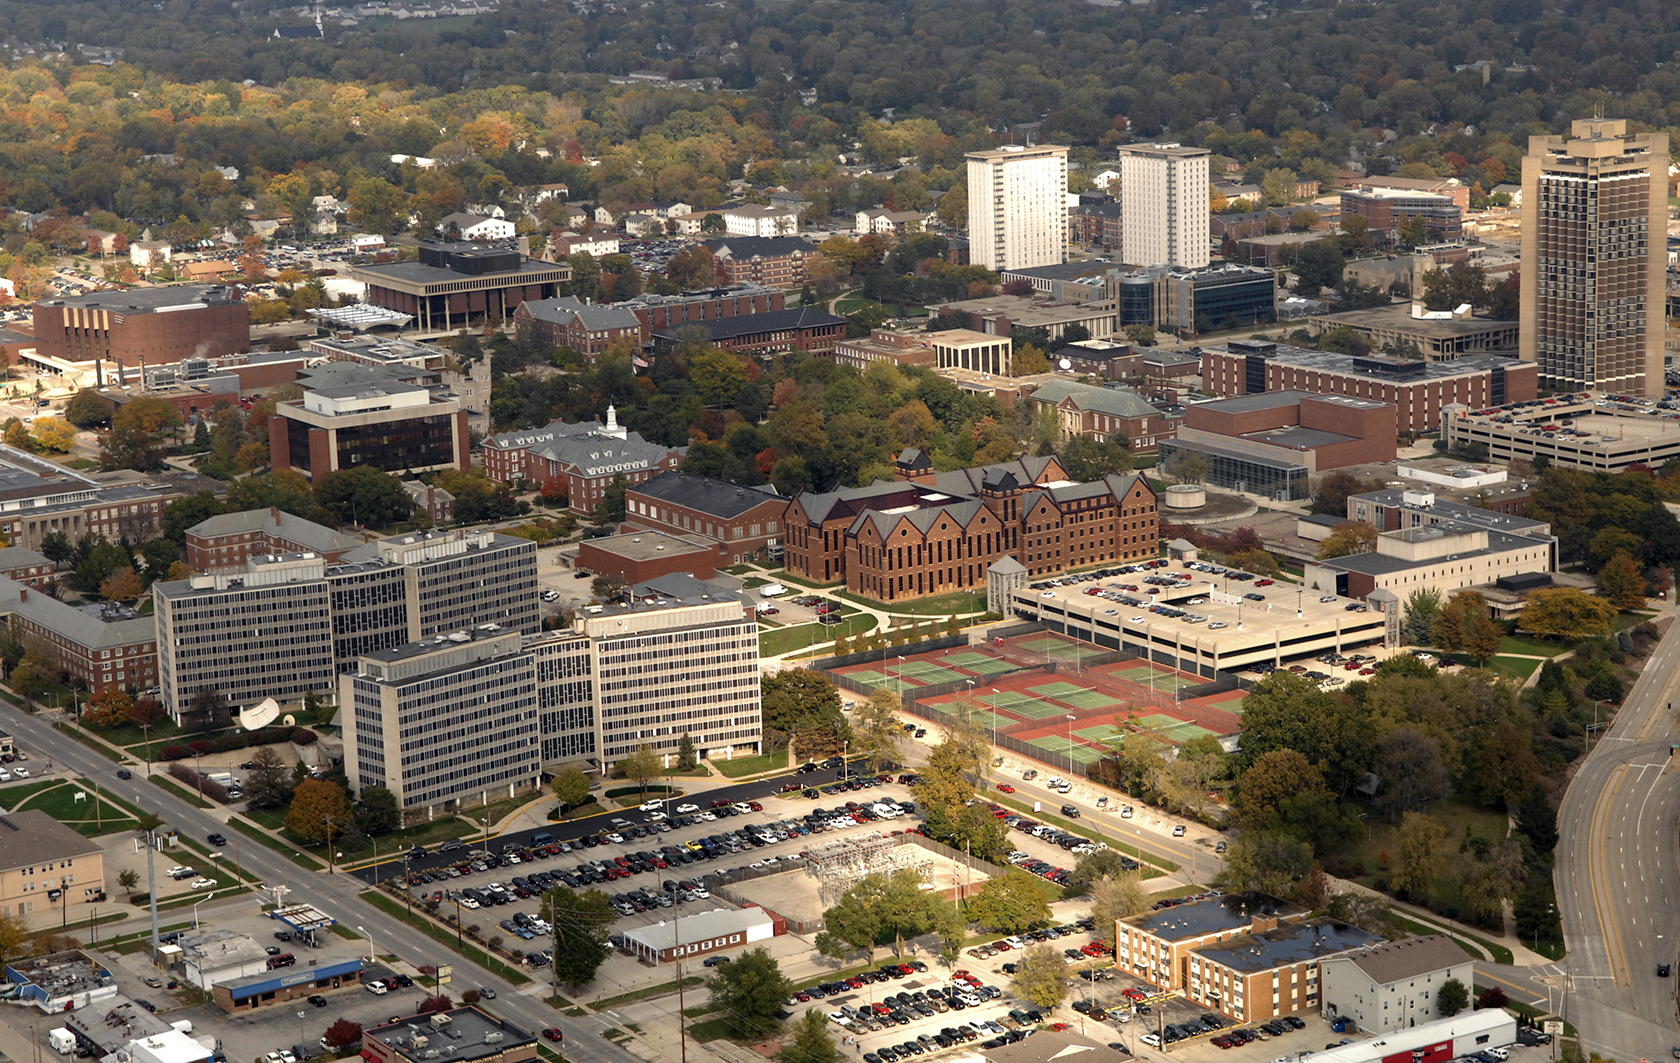 Aerial view of campus looking NE